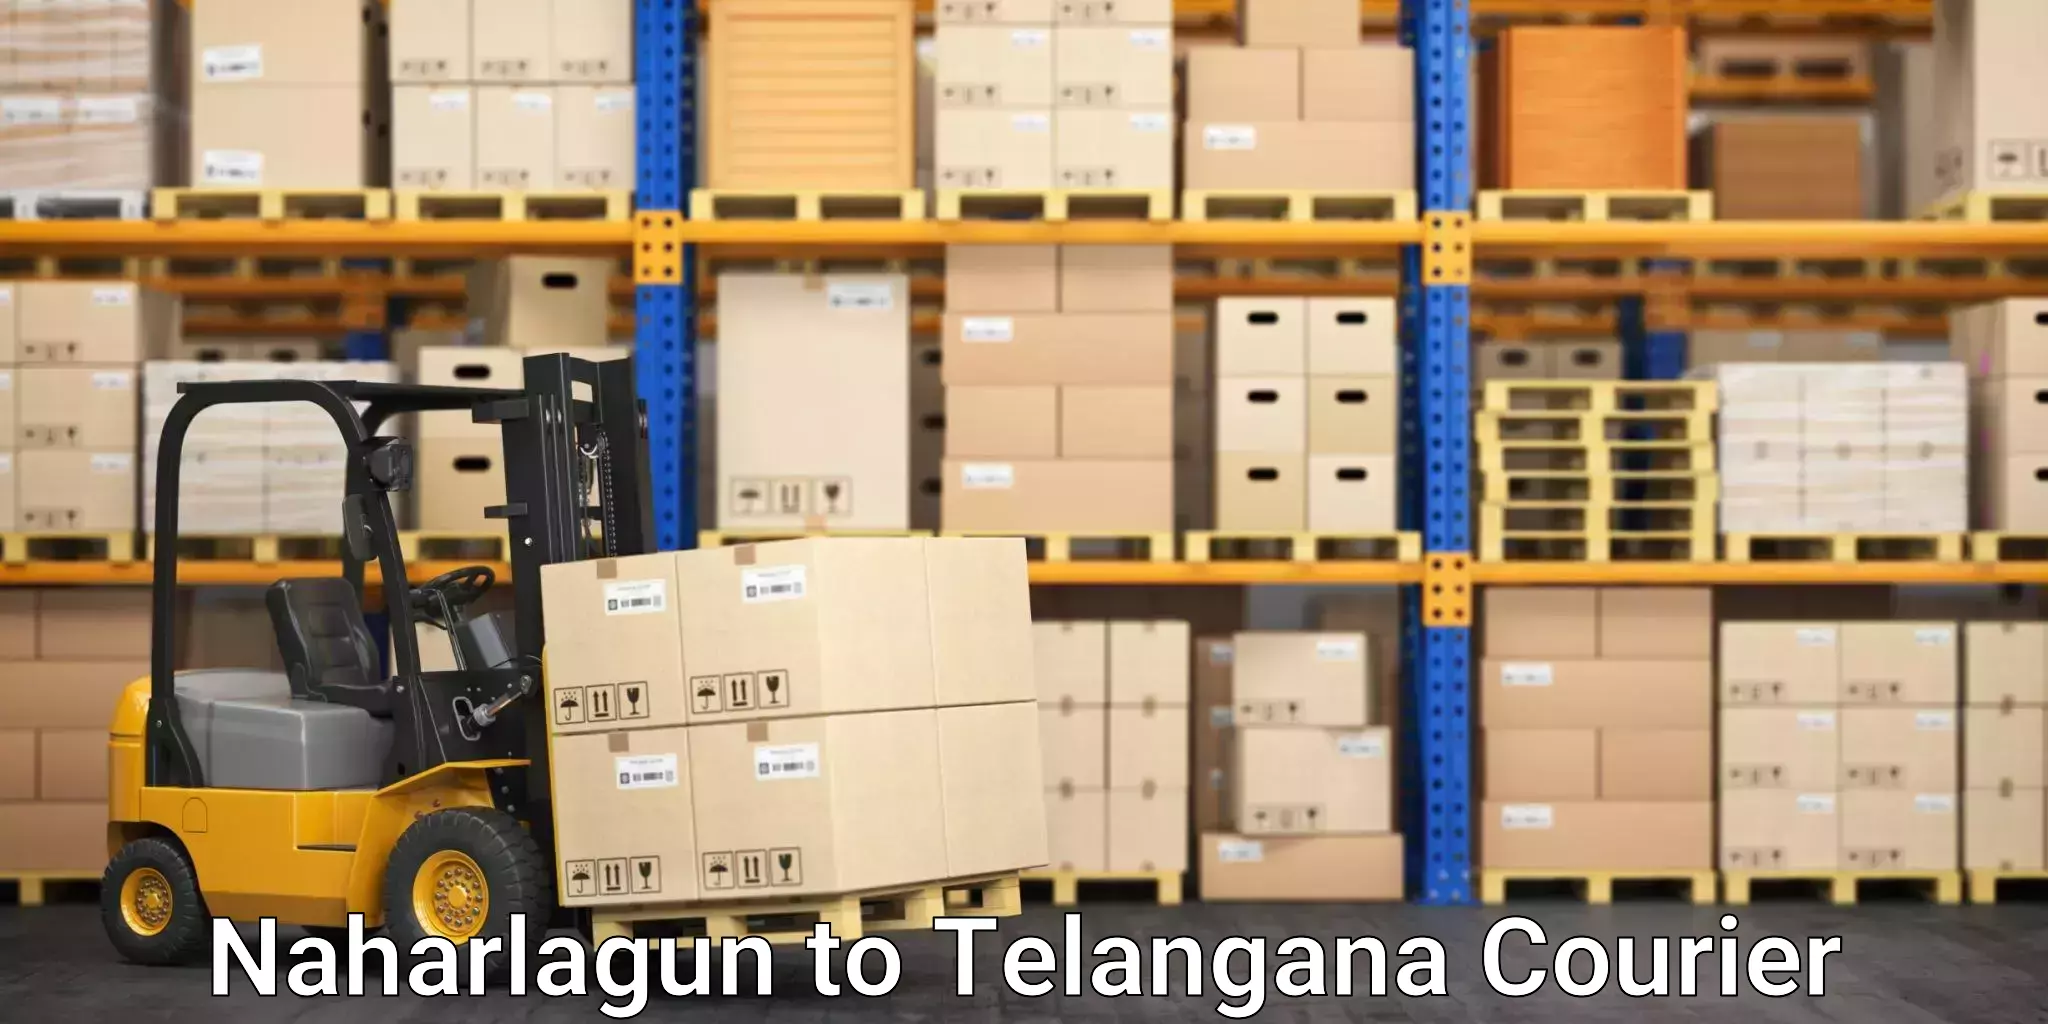 Efficient parcel delivery in Naharlagun to Babasagar